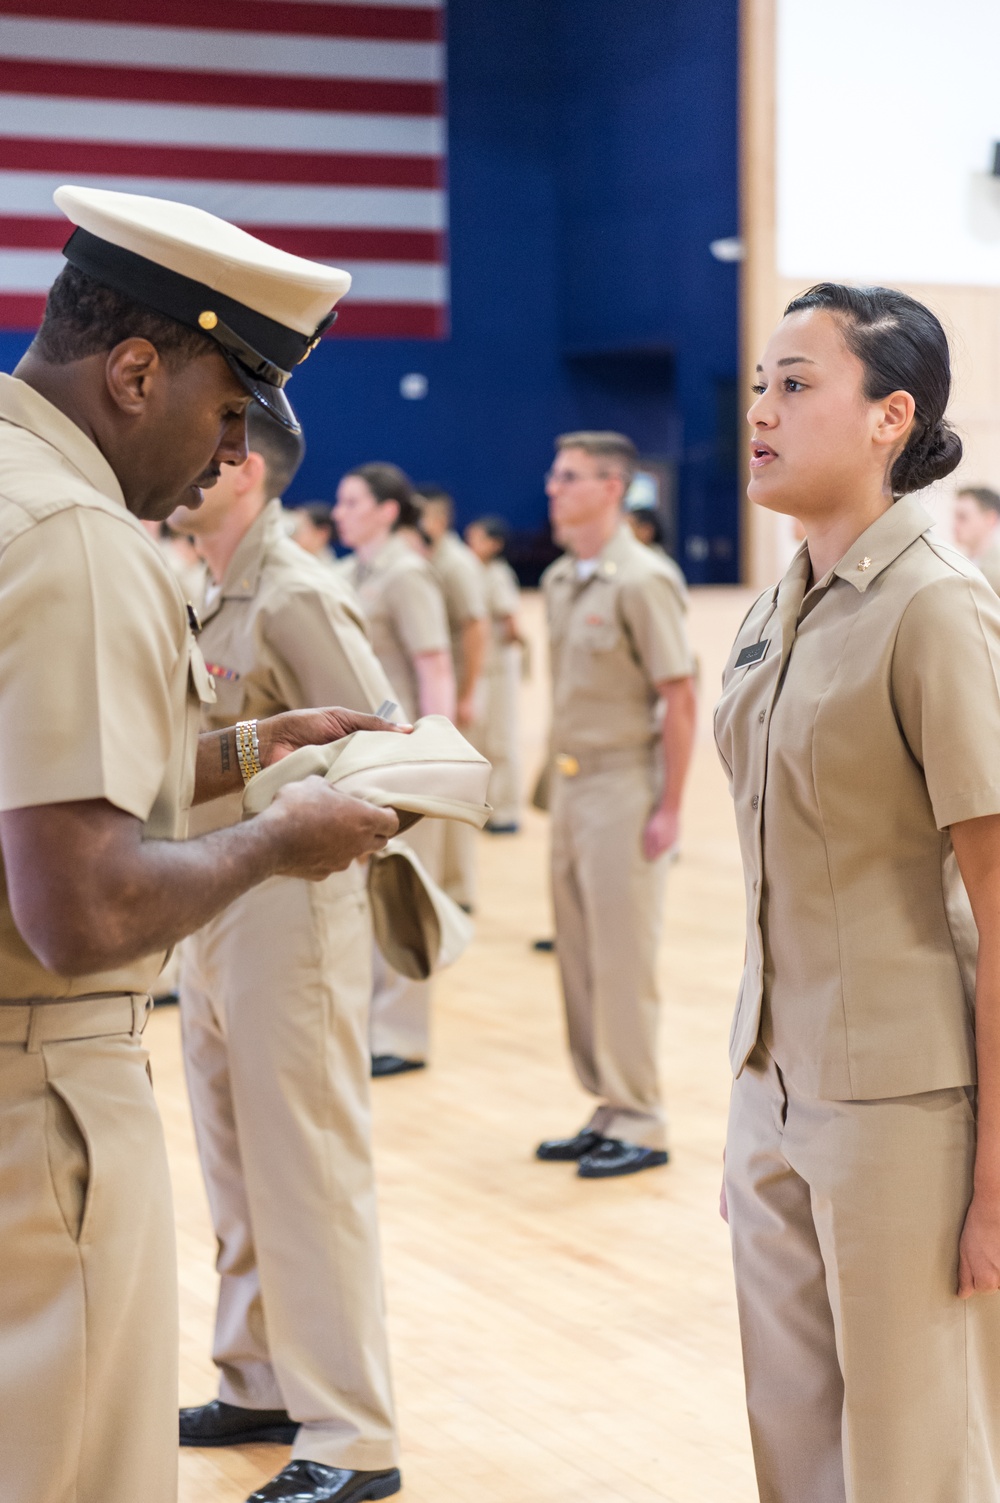 191107-N-TE695-0012 NEWPORT, R.I. (Nov. 7, 2019) -- Navy Officer Development School conducts a uniform inspection